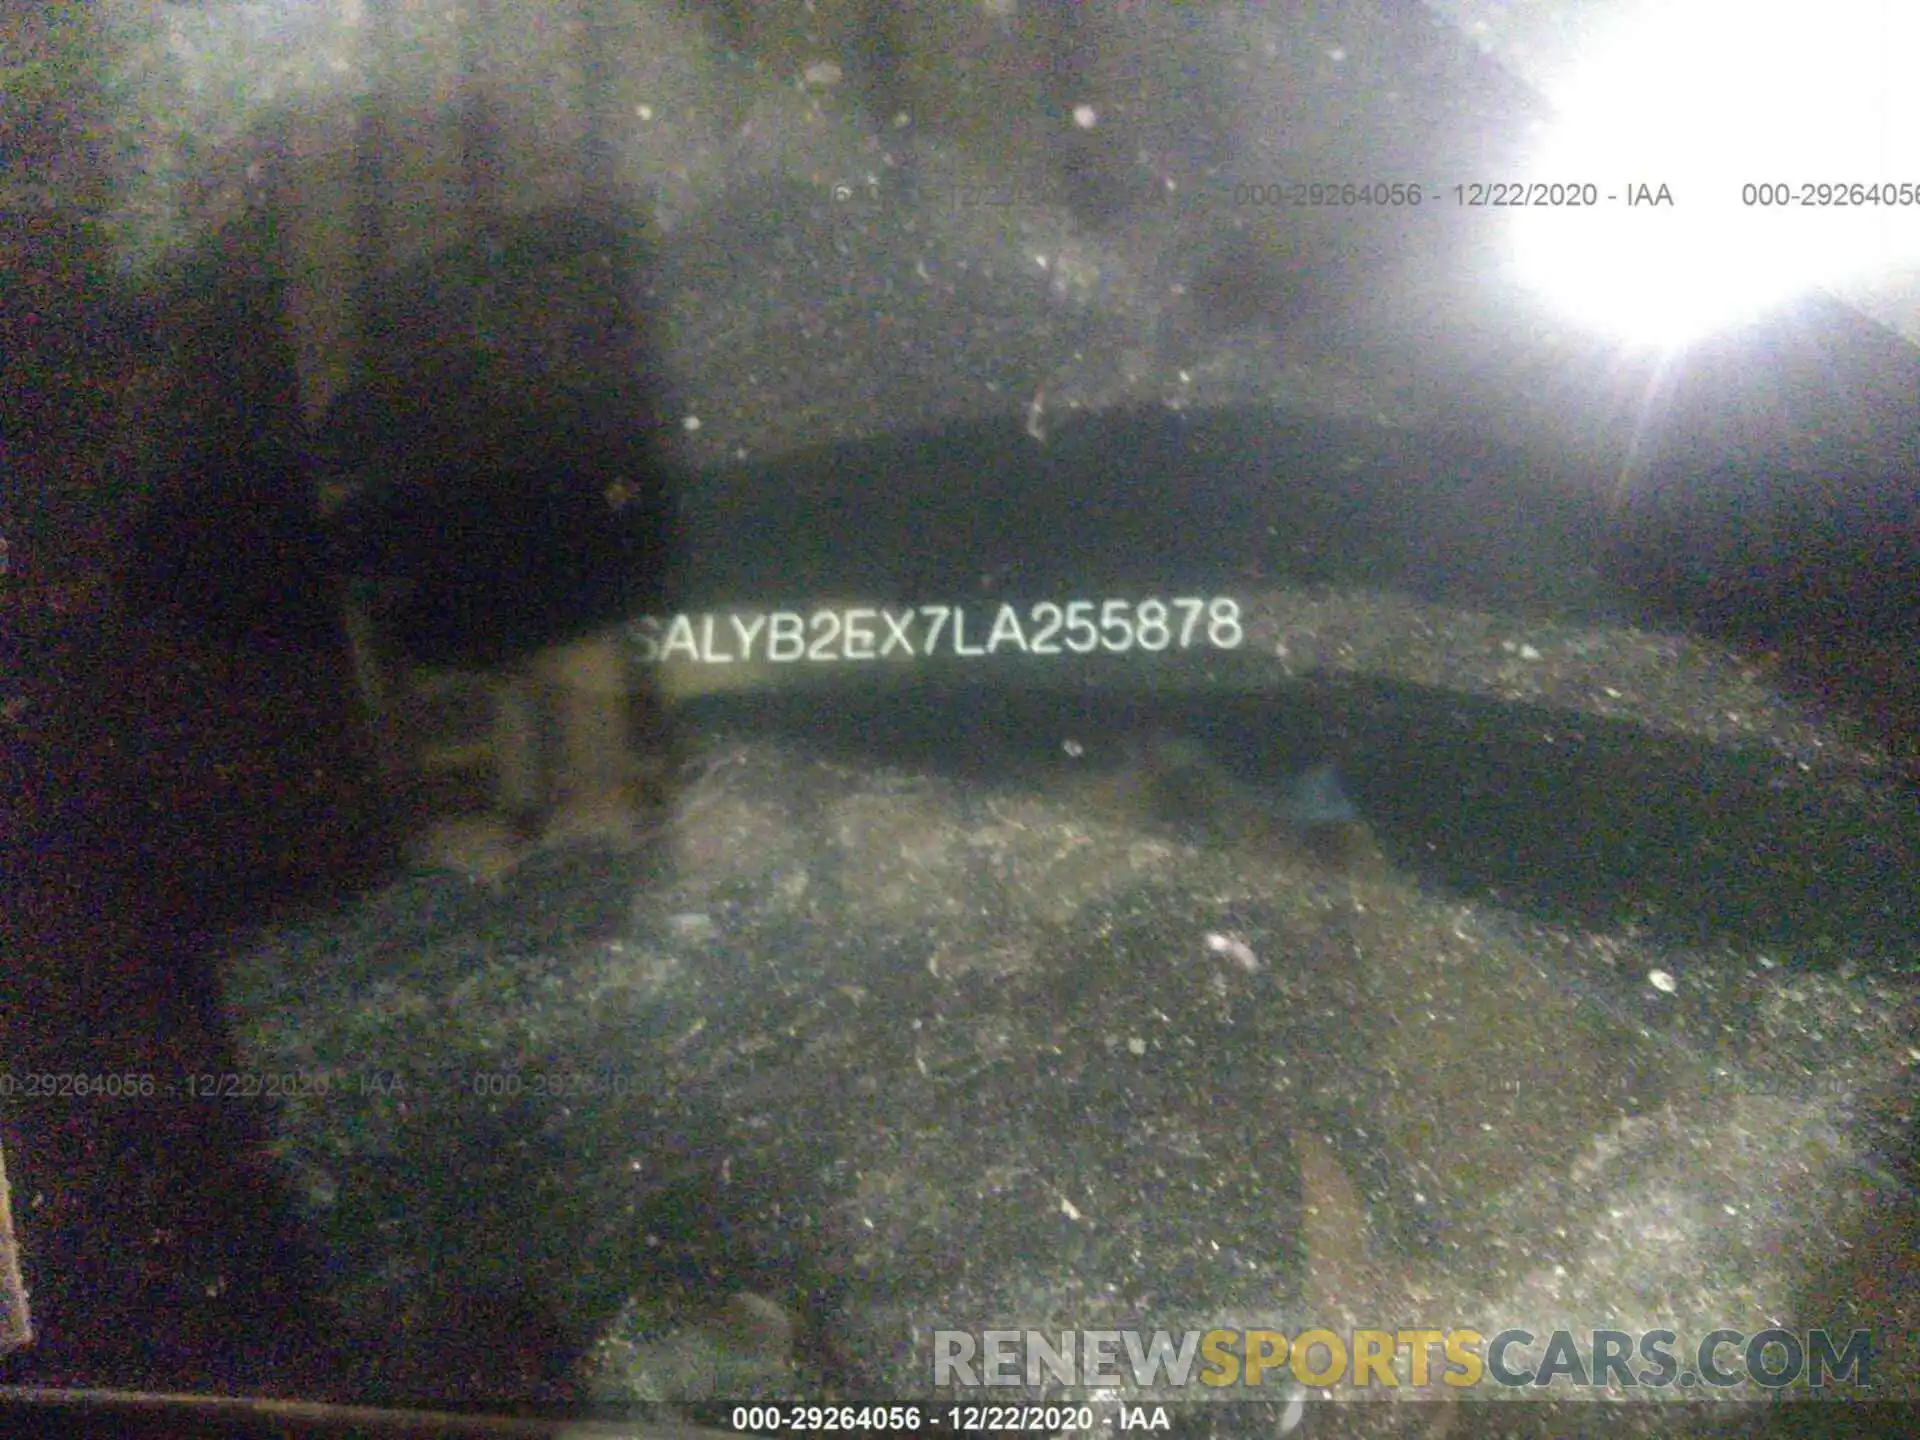 9 Photograph of a damaged car SALYB2EX7LA255878 LAND ROVER RANGE ROVER VELAR 2020